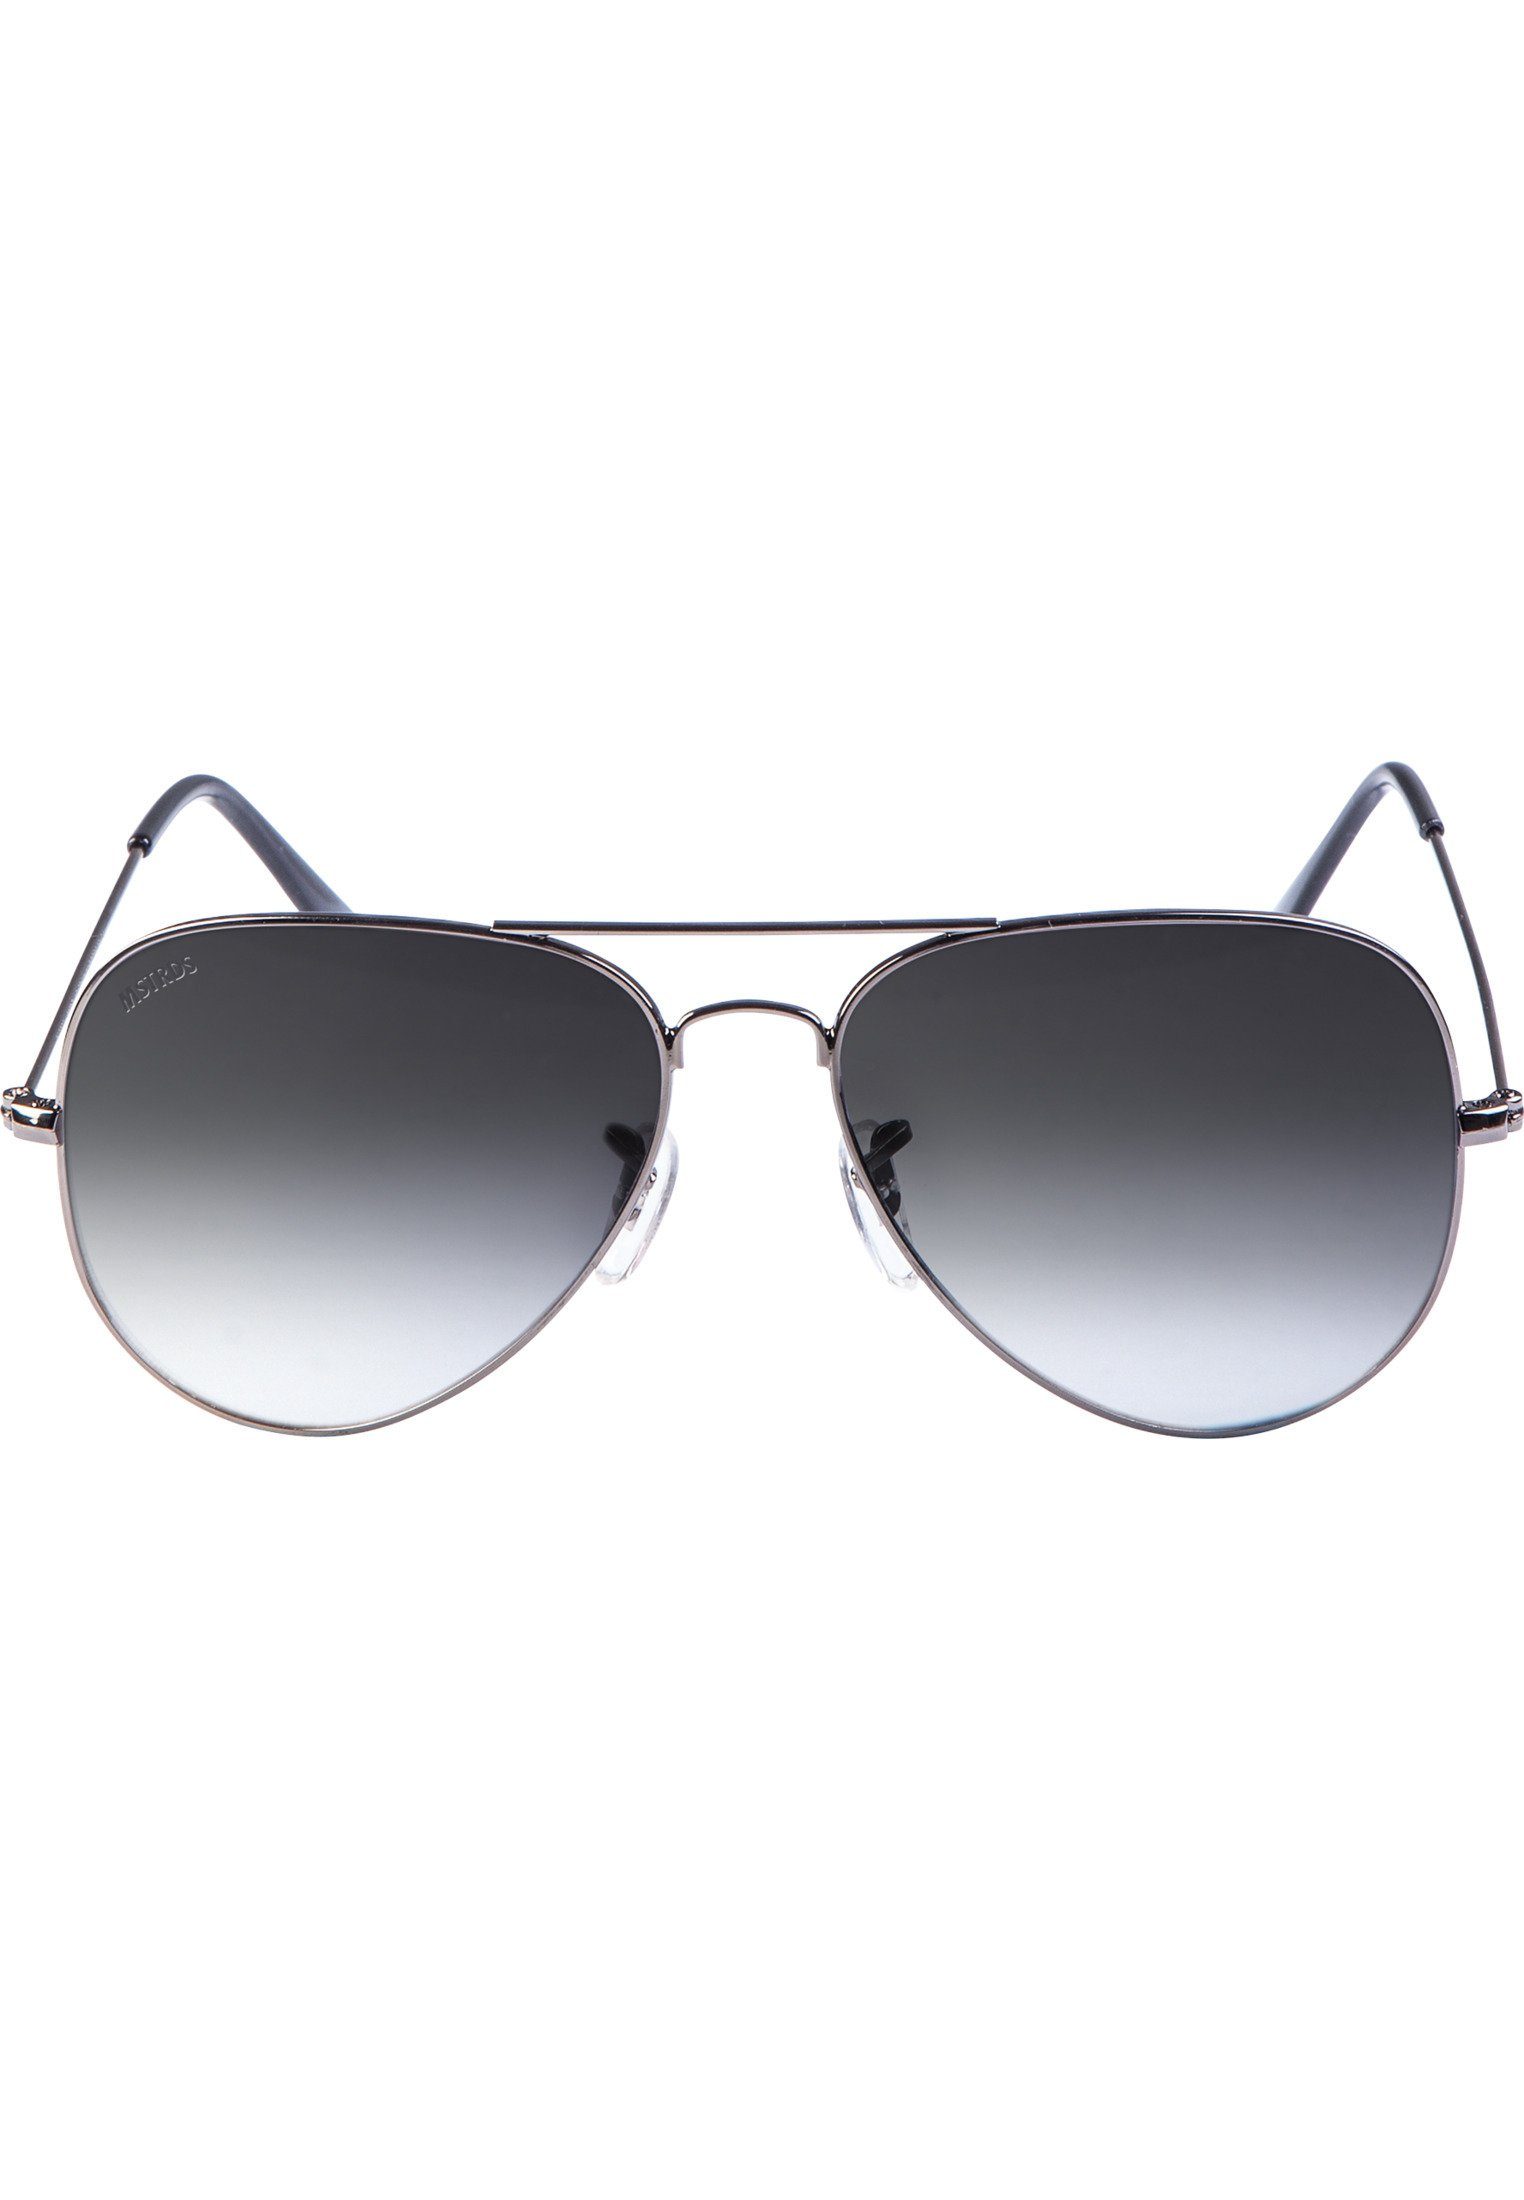 MSTRDS Sonnenbrille Accessoires Sunglasses PureAv Youth gun/grey